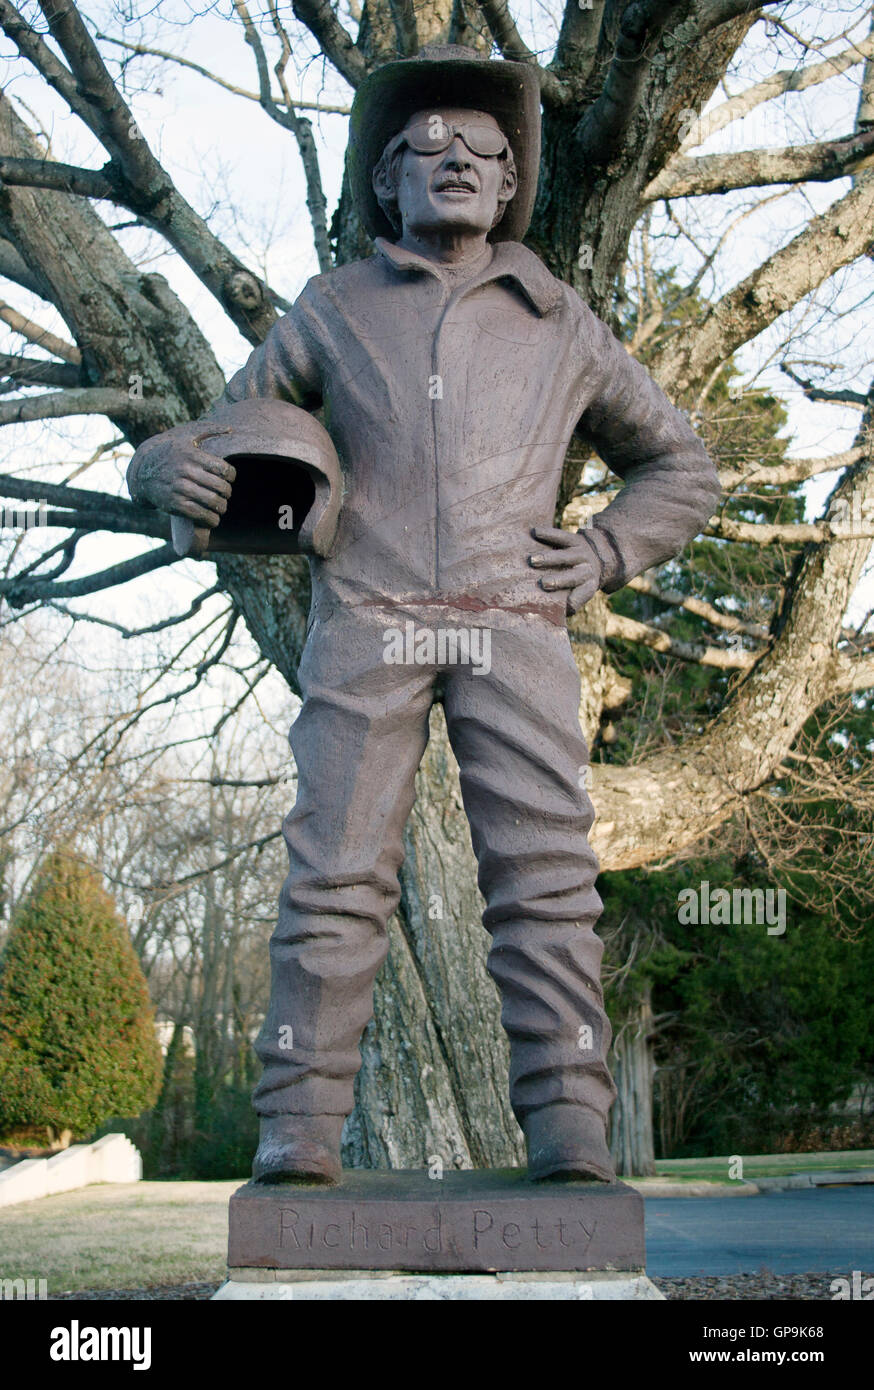 Race car driver Richard Petty Statue in Randelman North Carolina Stock Photo